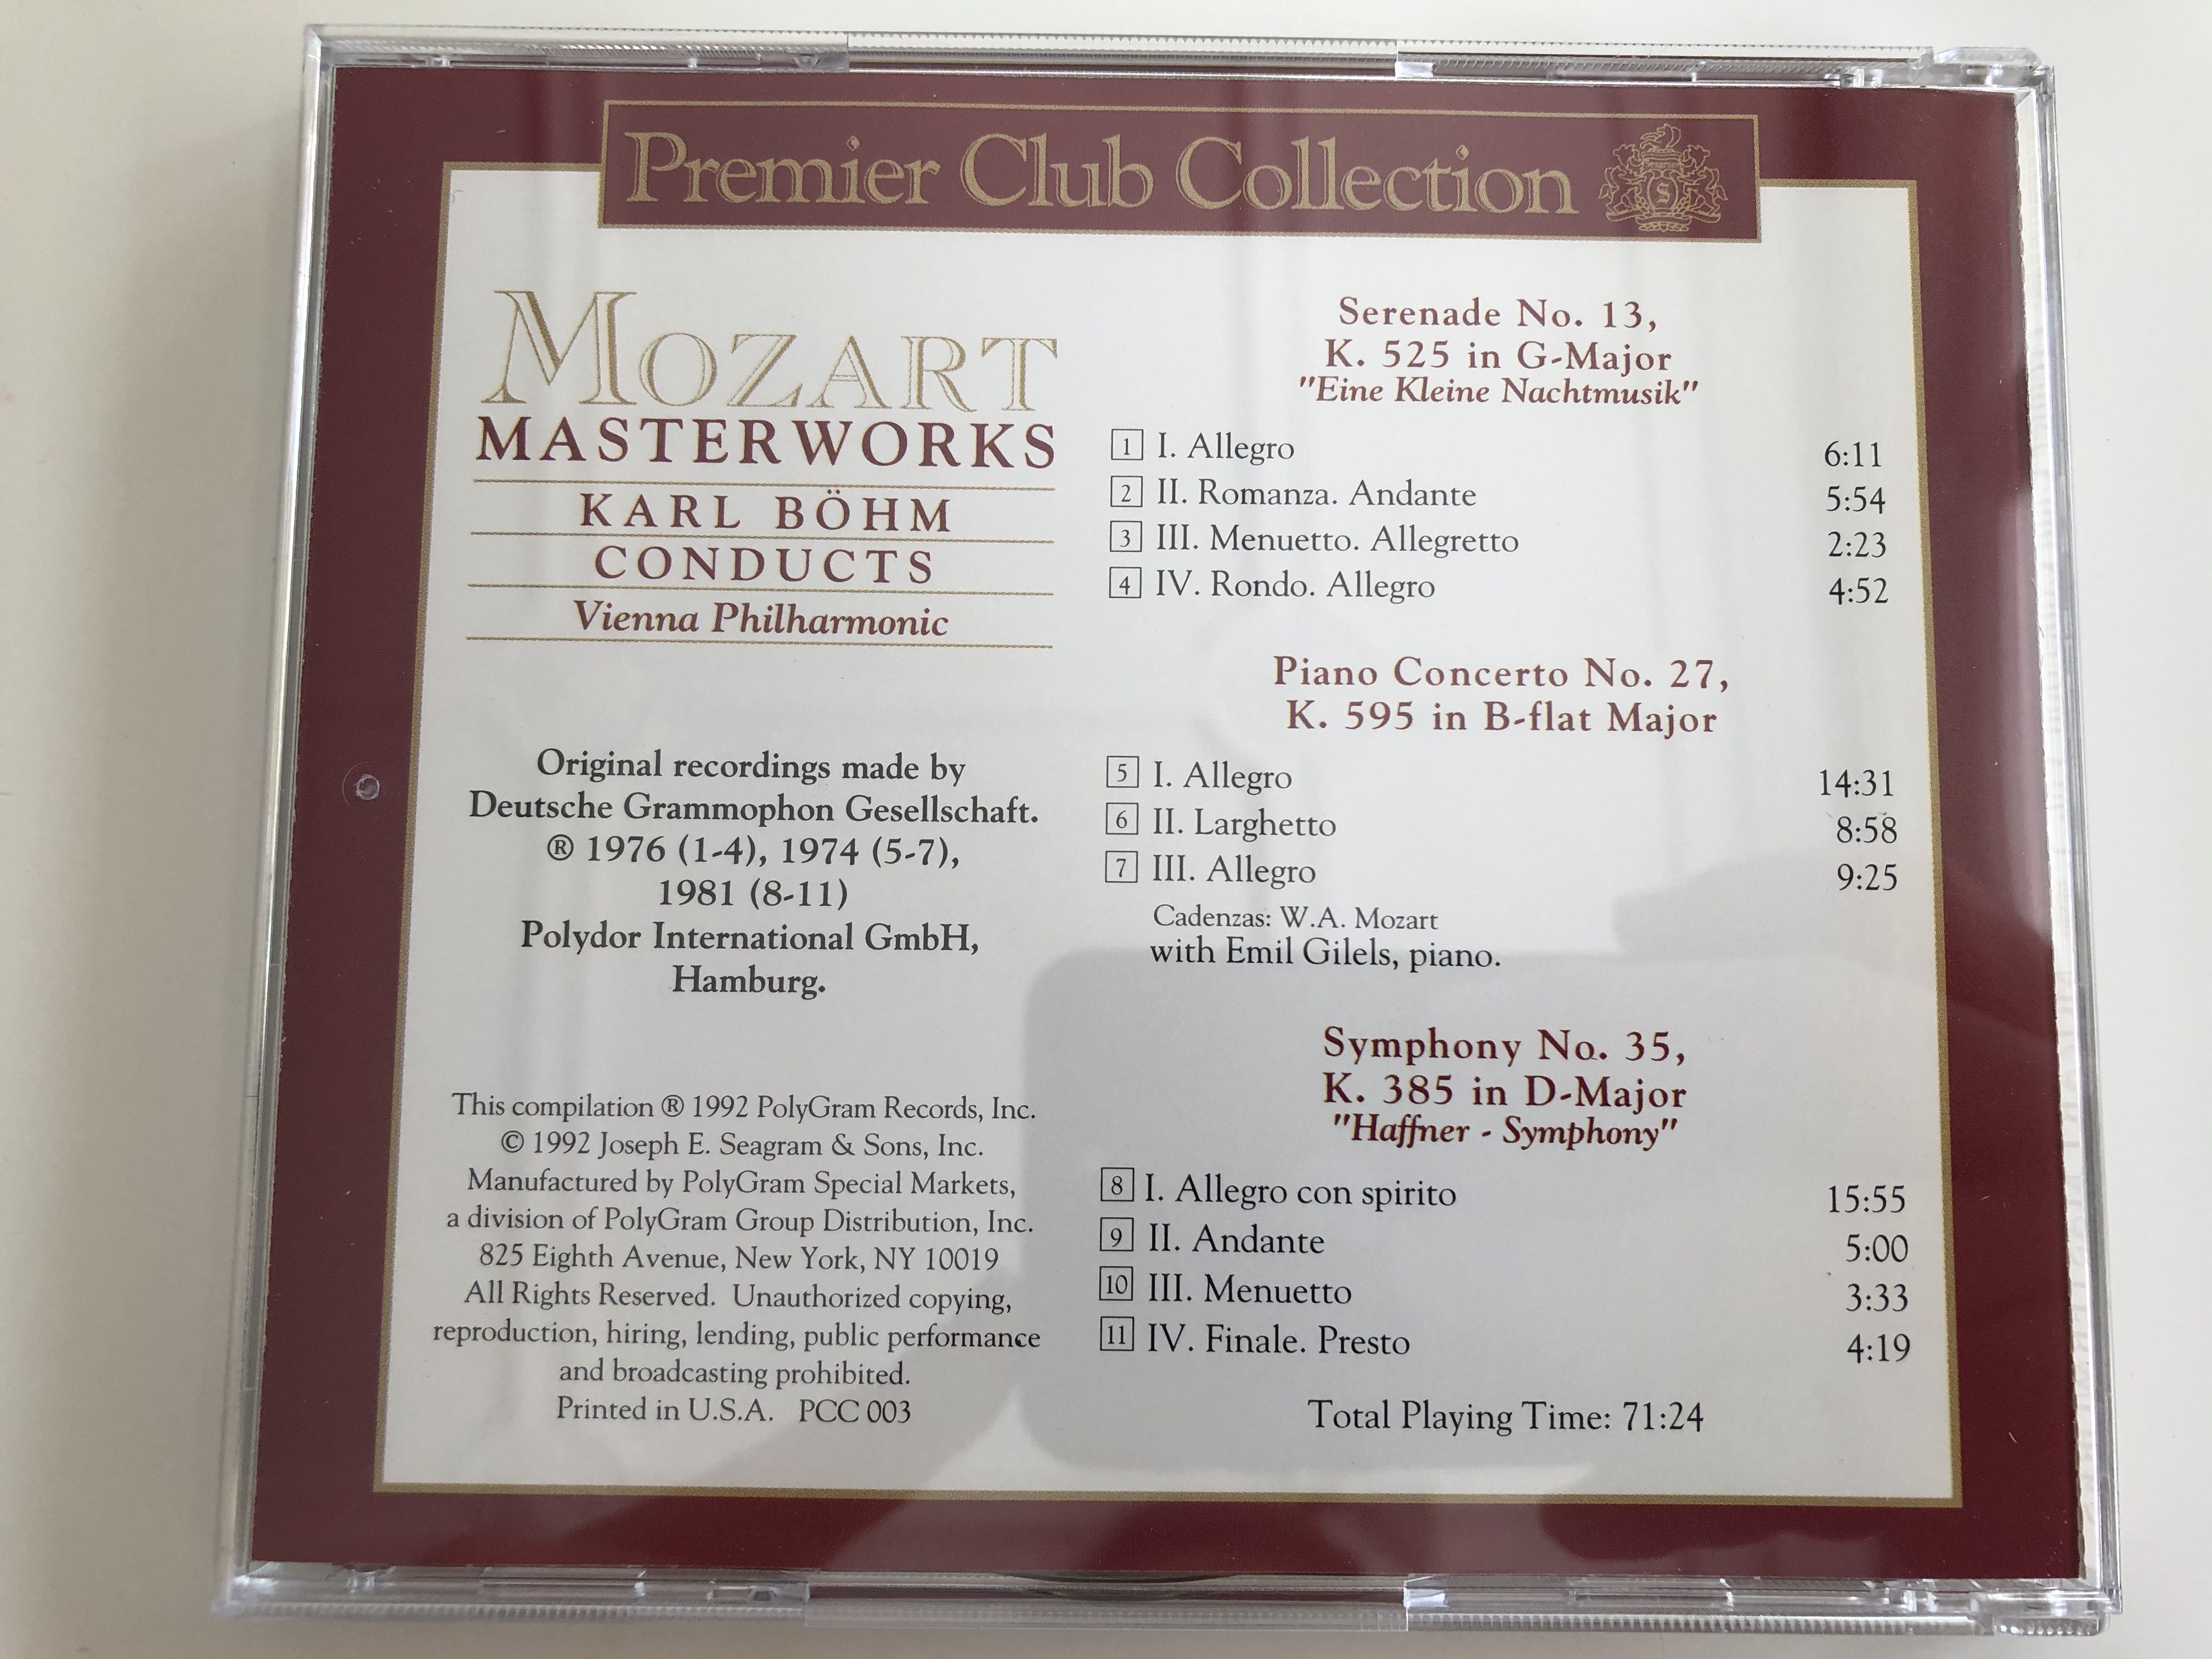 mozart-masterworks-limited-edition-vol.3-conducted-karl-bohm-vienna-philharmonic-premier-club-collection-audio-cd-1992-pcc-003-6-.jpg